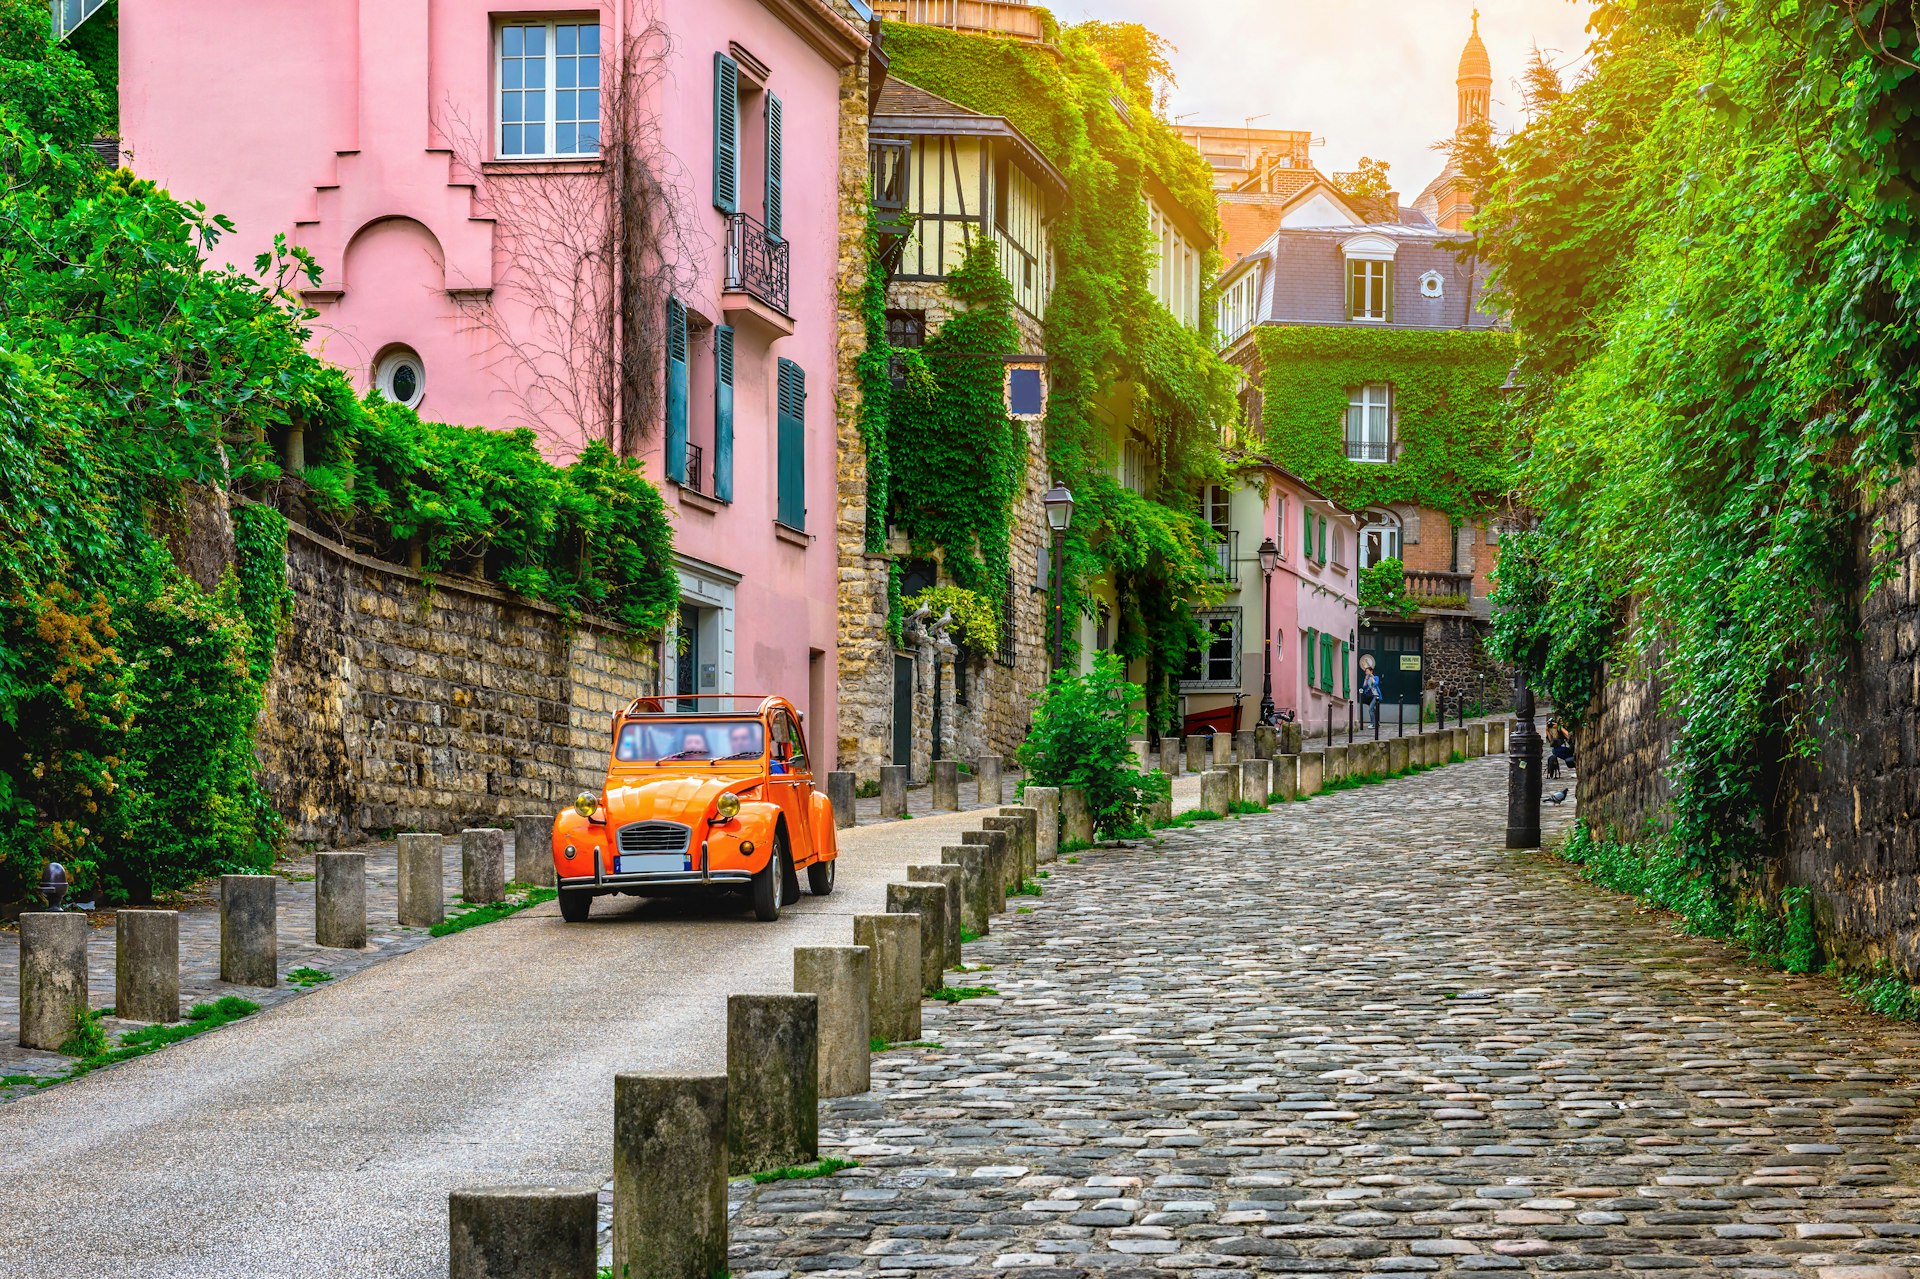 An orange Citroën 2CV car travels down an old street in the Montmartre quarter of Paris